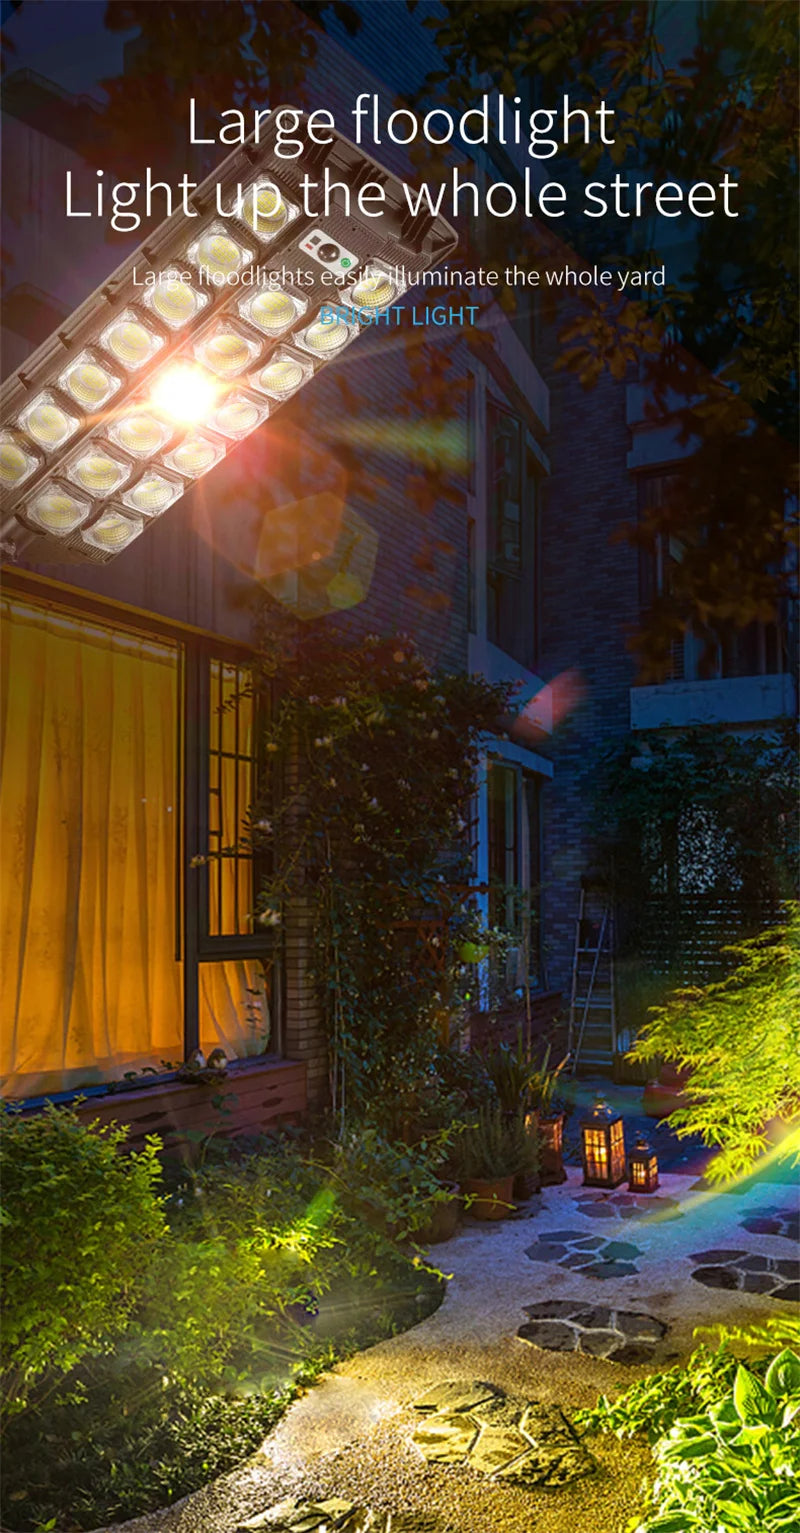 15000LM Solar Street Light, Bright LED floodlight illuminates entire yards with ease